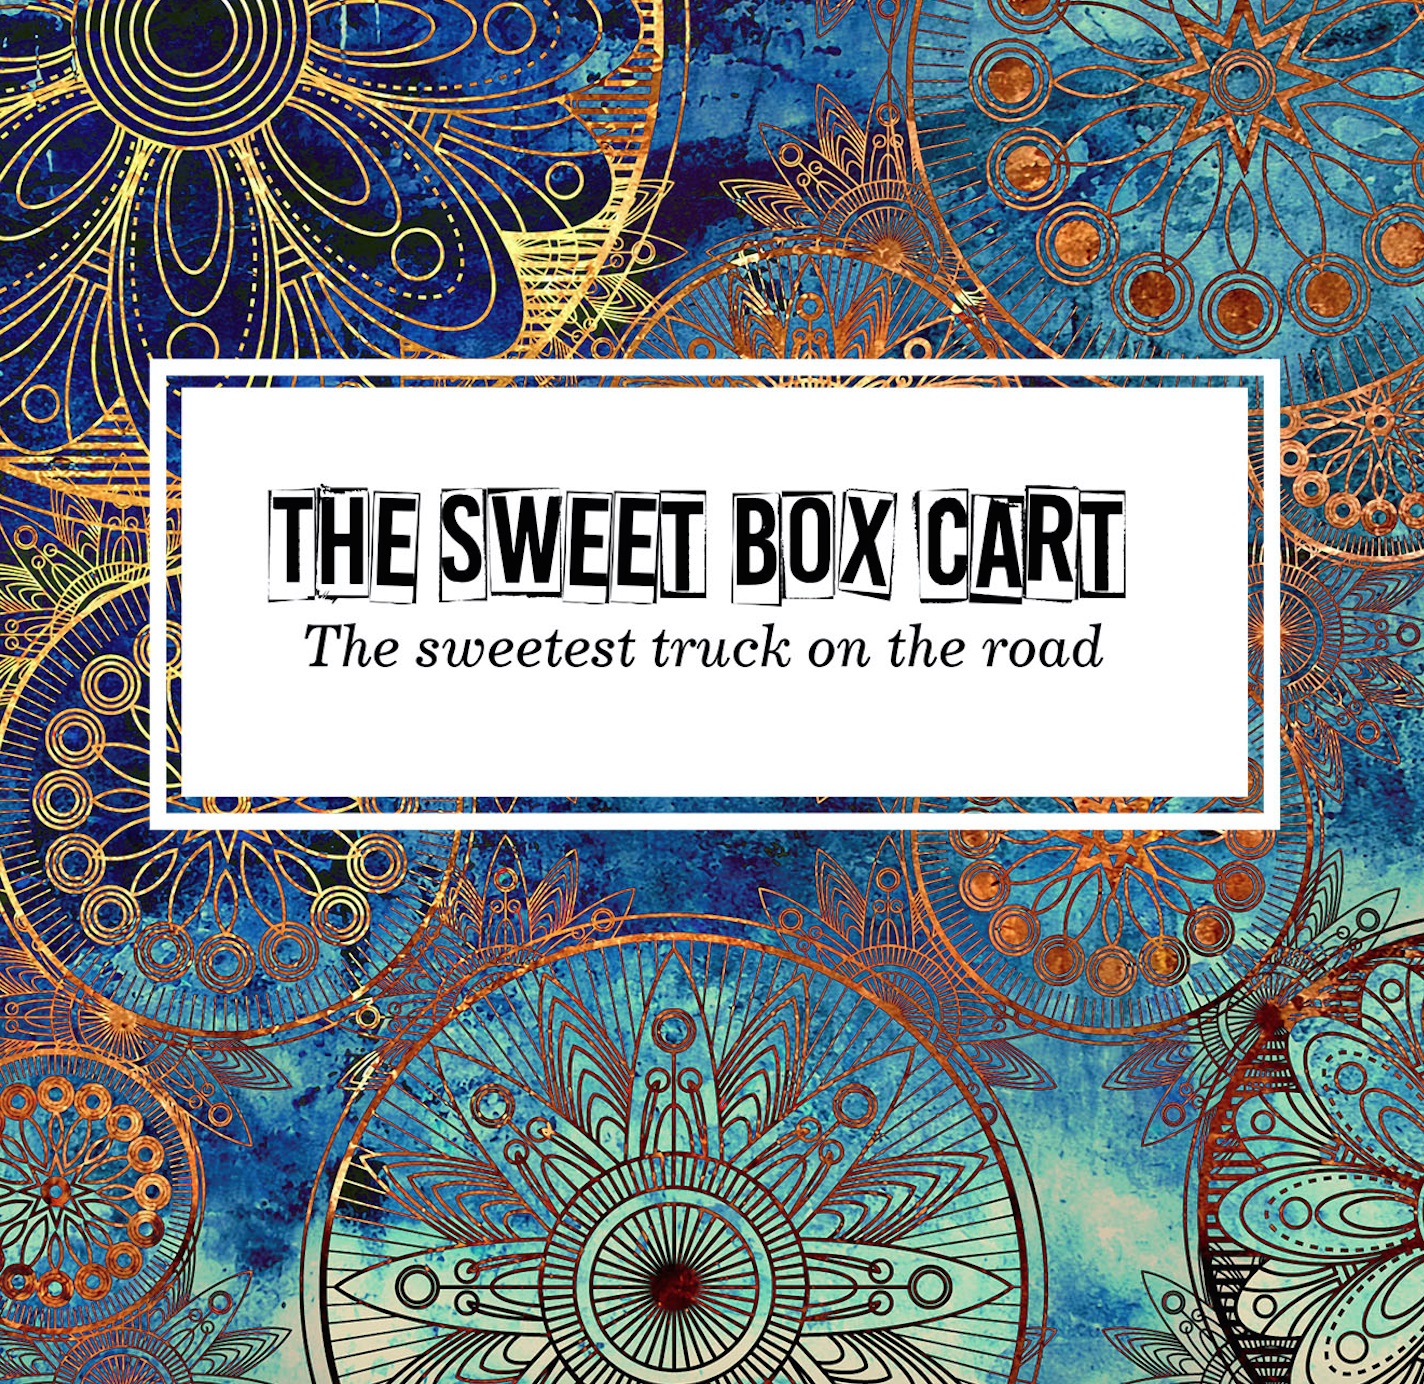 The Sweet Box Cart